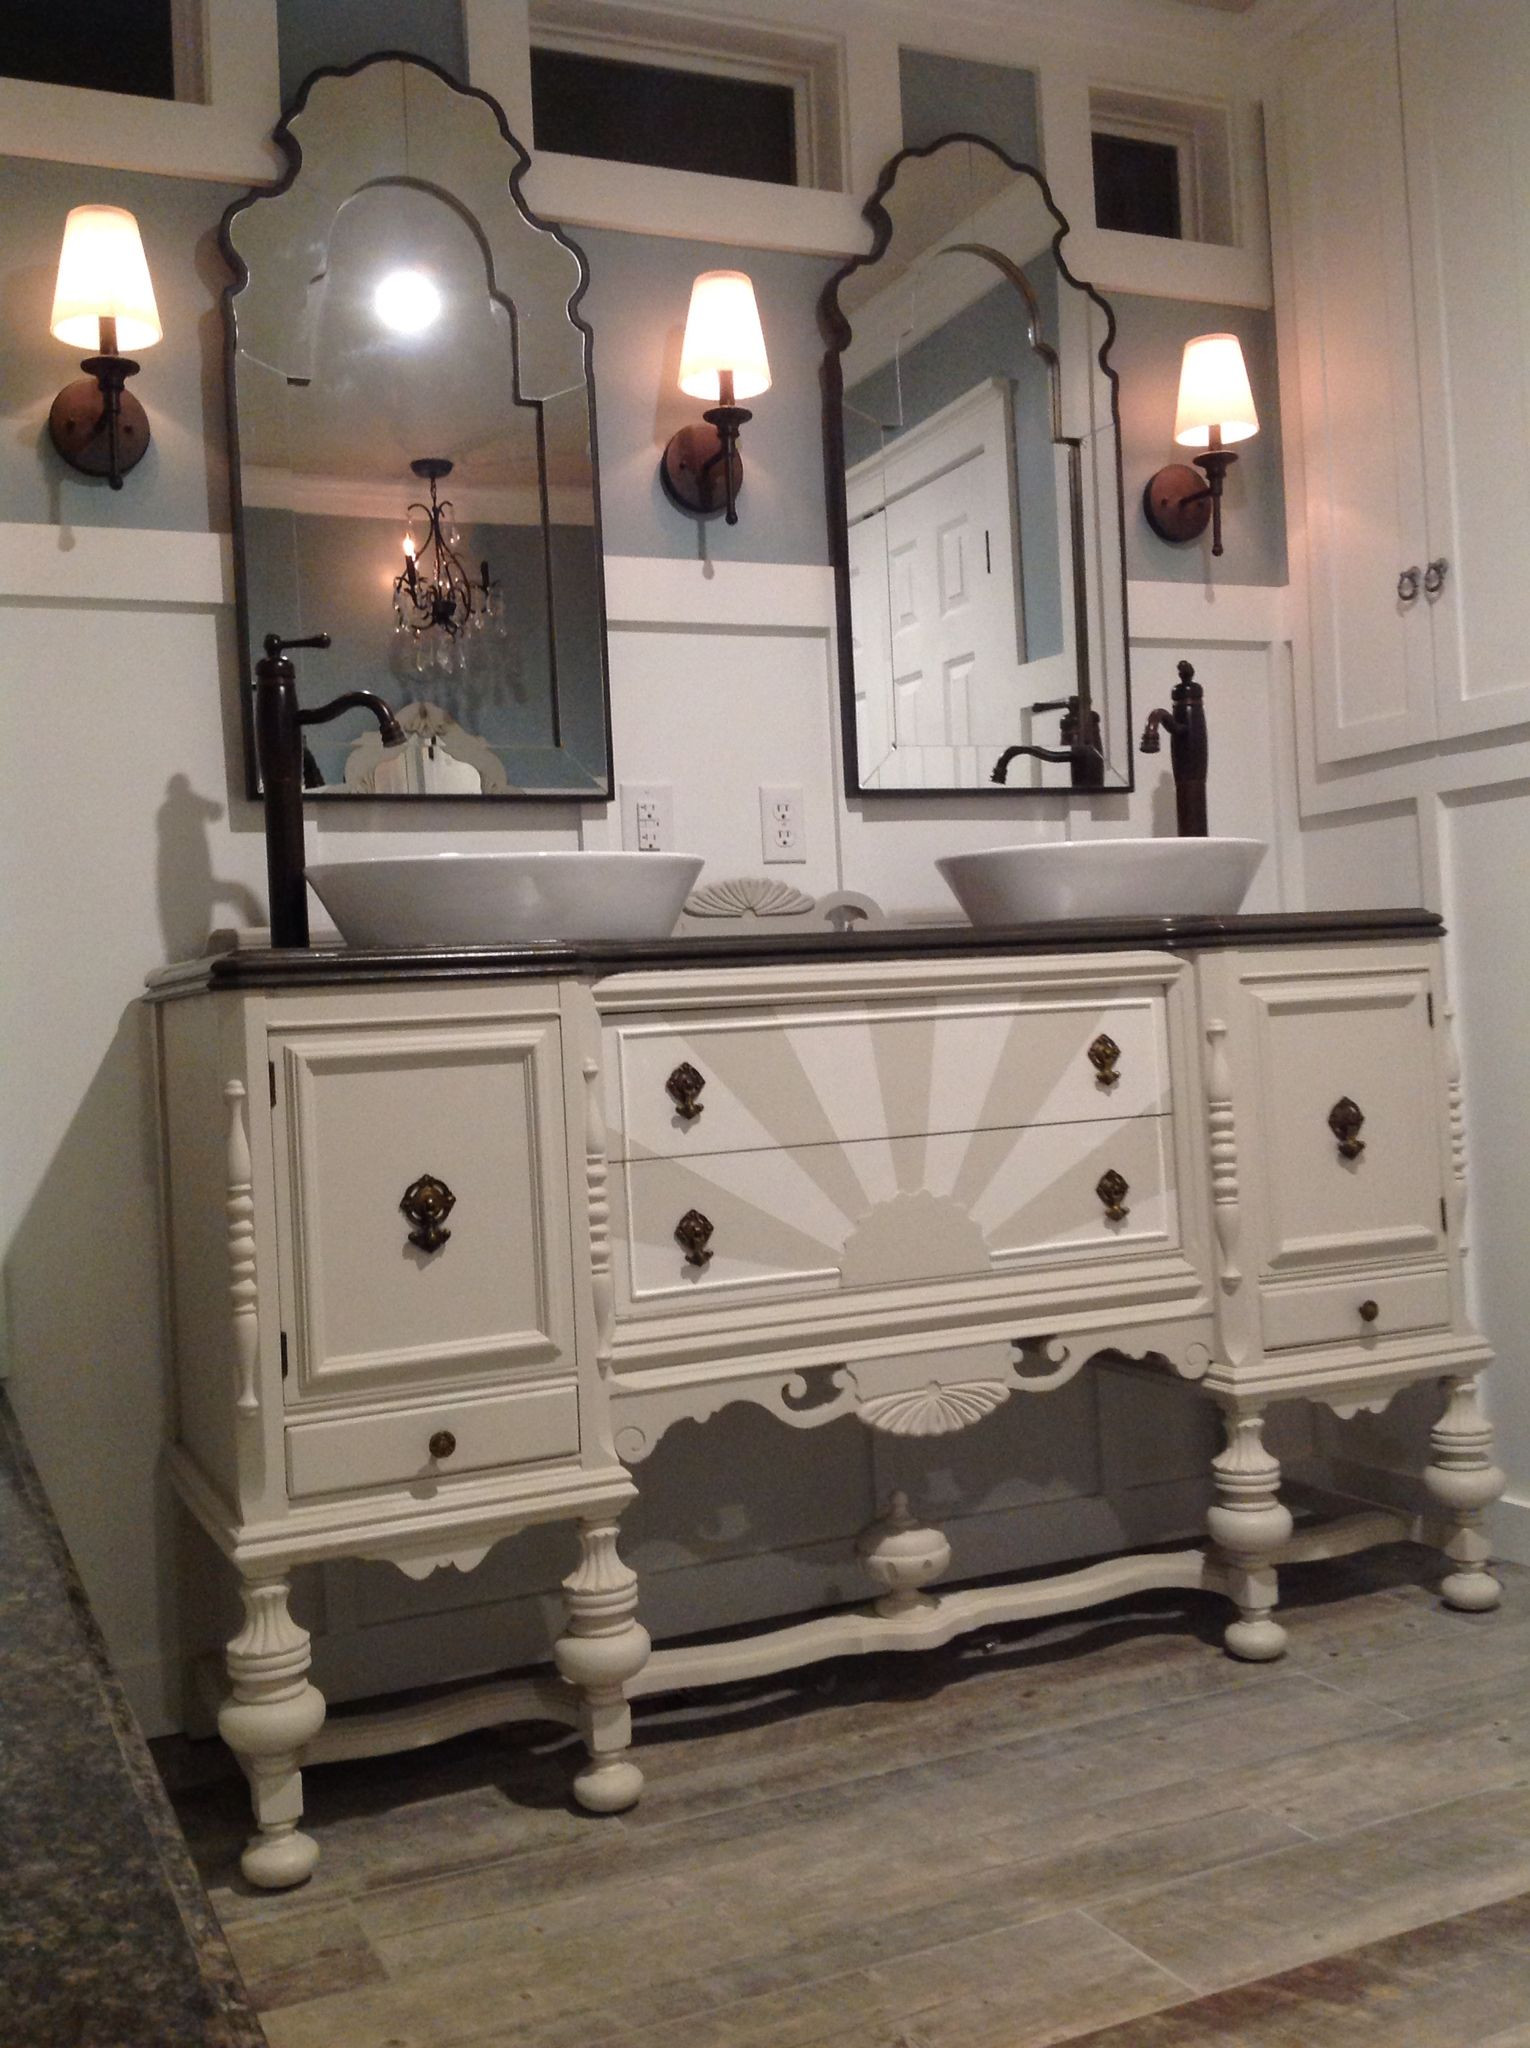 Repurposed Bathroom Vanities
 Our antique sideboard buffet repurposed into a bathroom